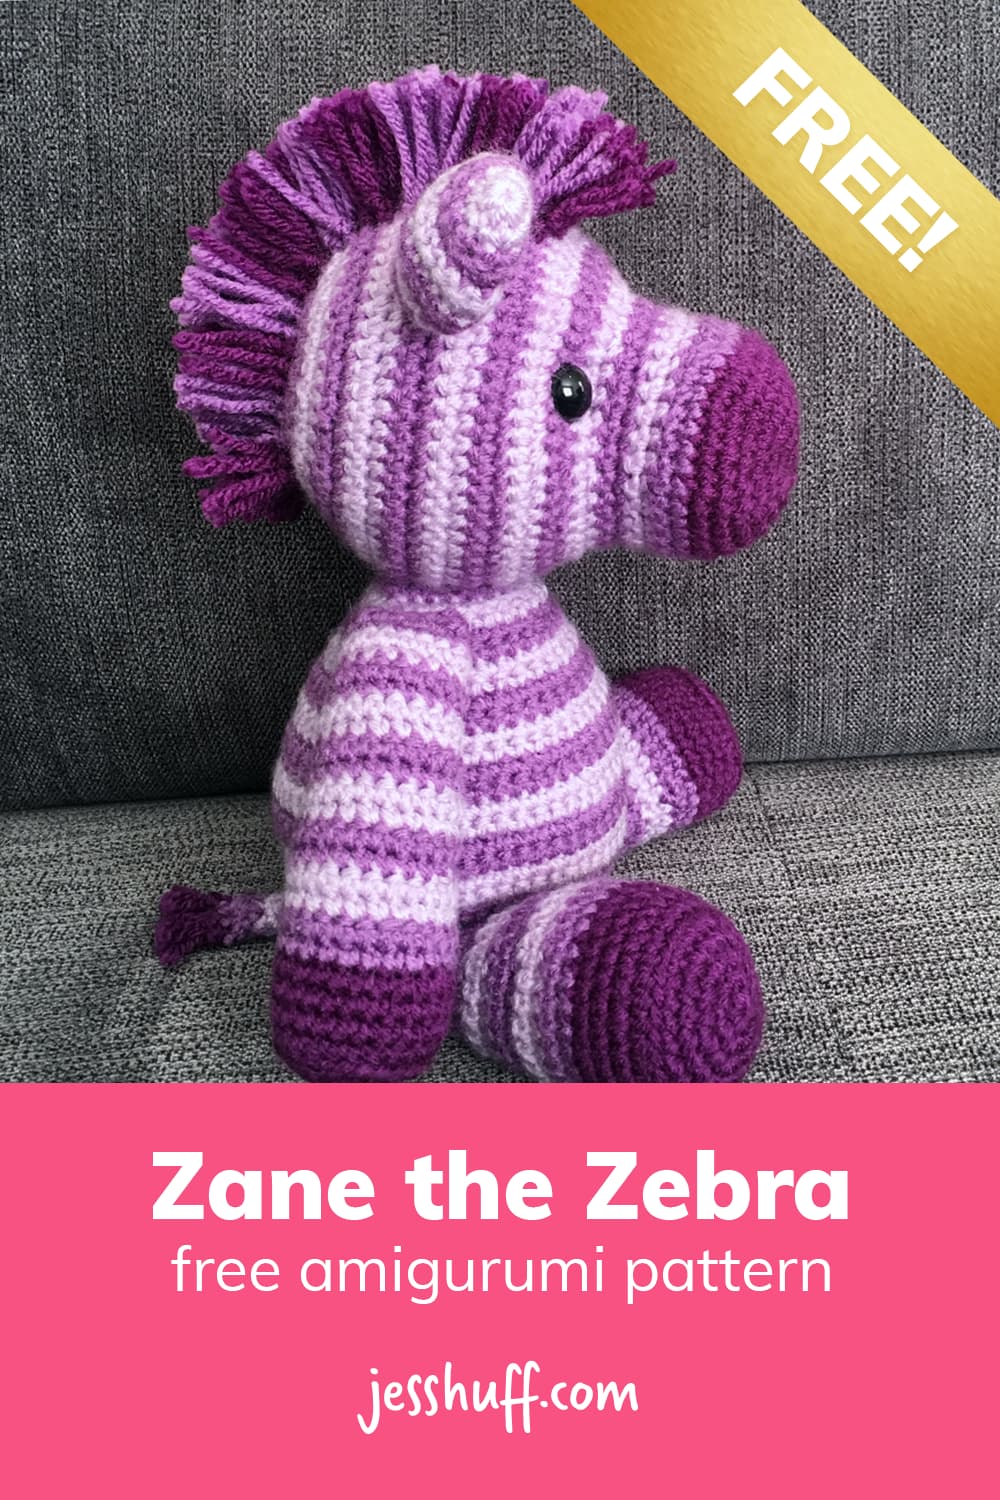 Zebra amigurumi pattern – how cute is this?? I can't believe it's free! via @heyjesshuff